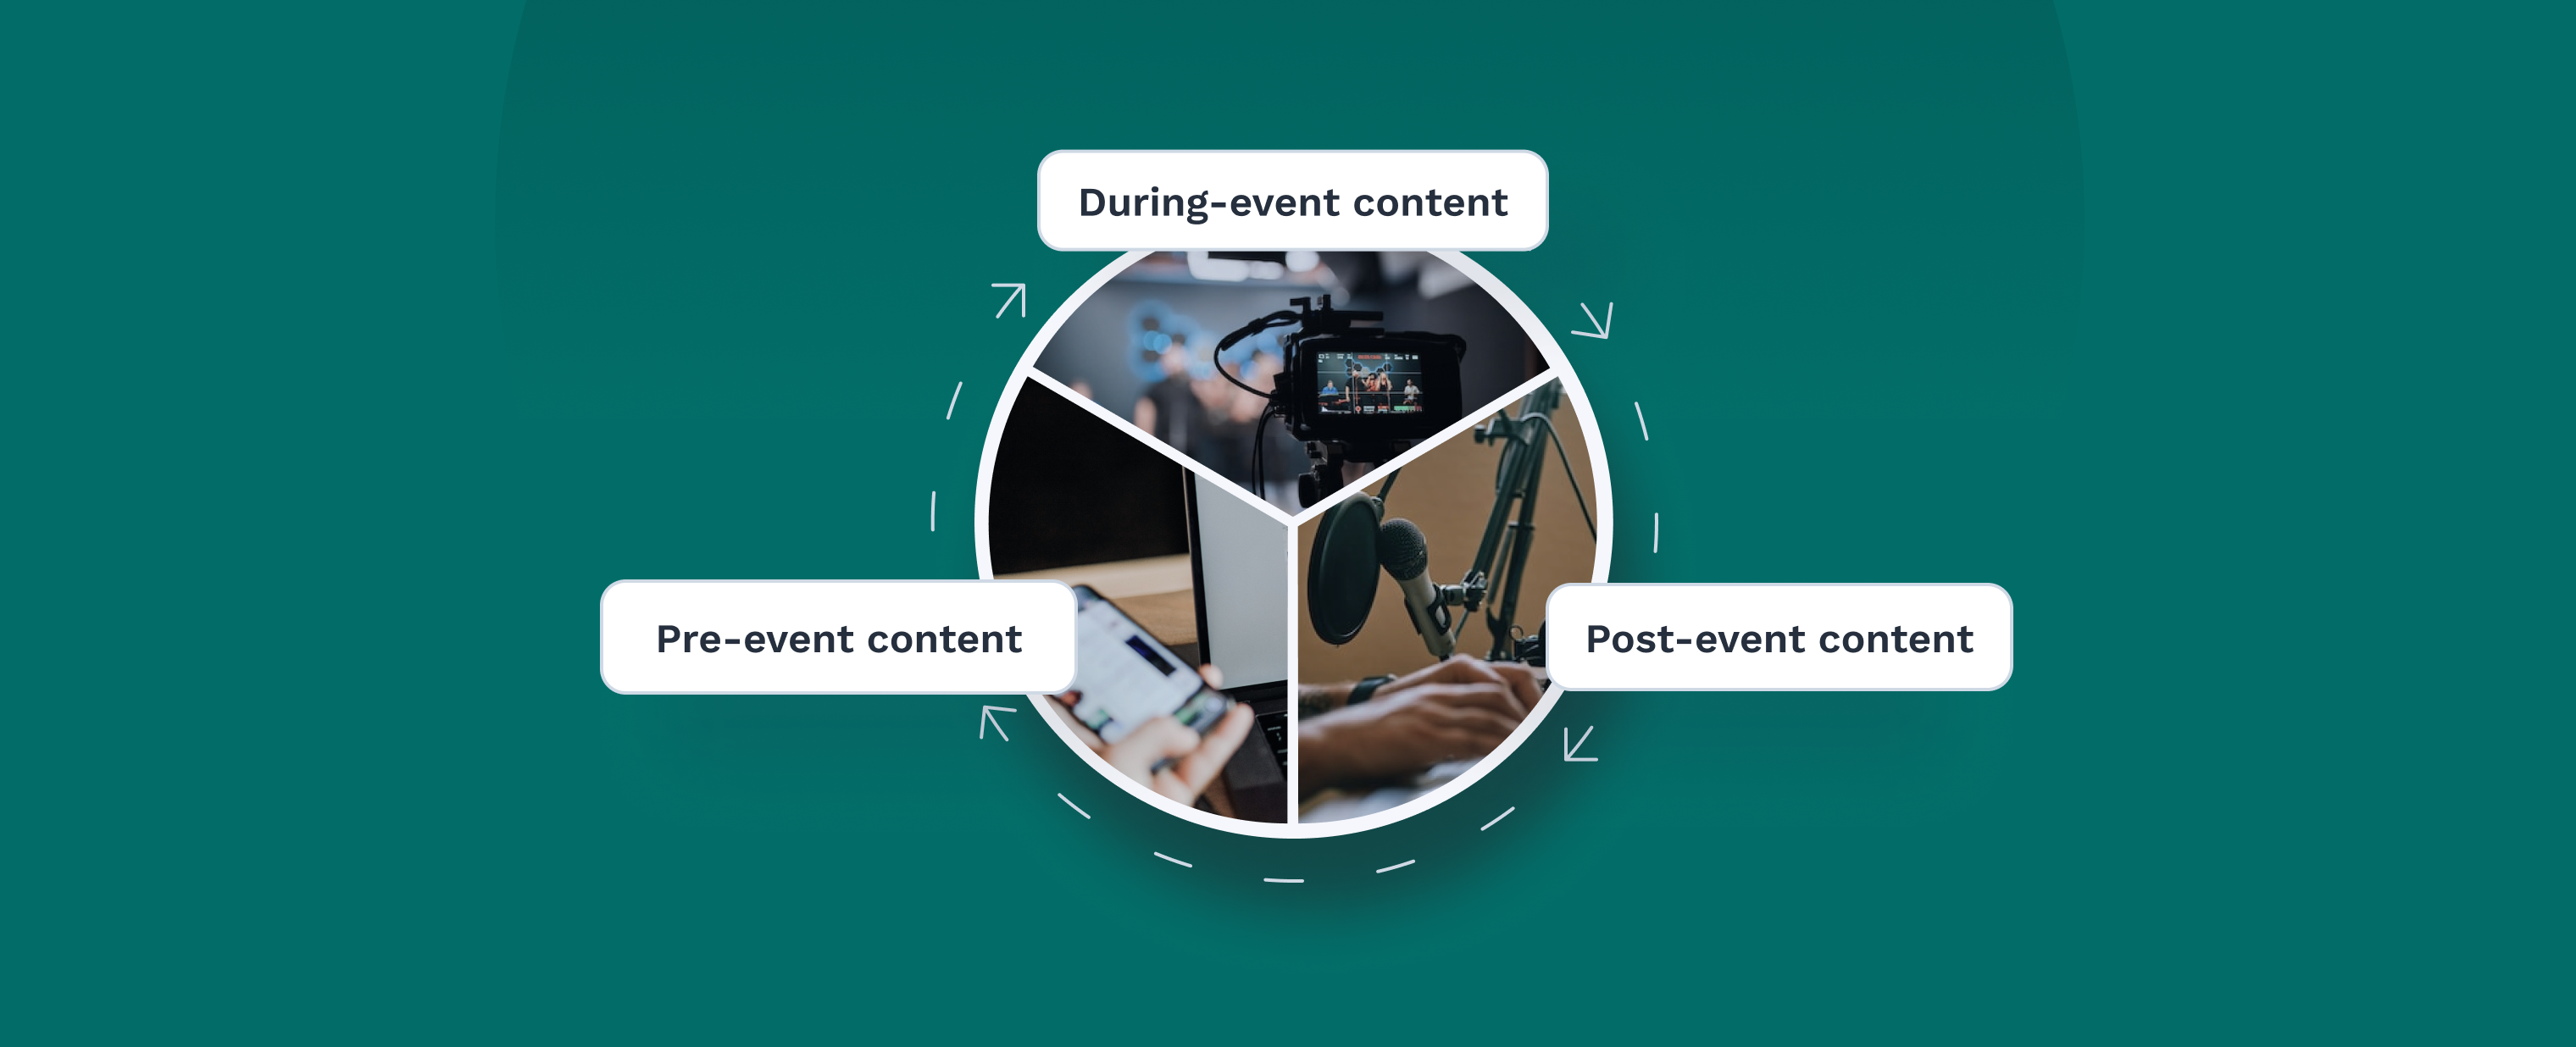 Swapcard_Event-Content-Repurposing_Meme_creating-engaging-event-content_Venn-Diagram-content-creation-cycle